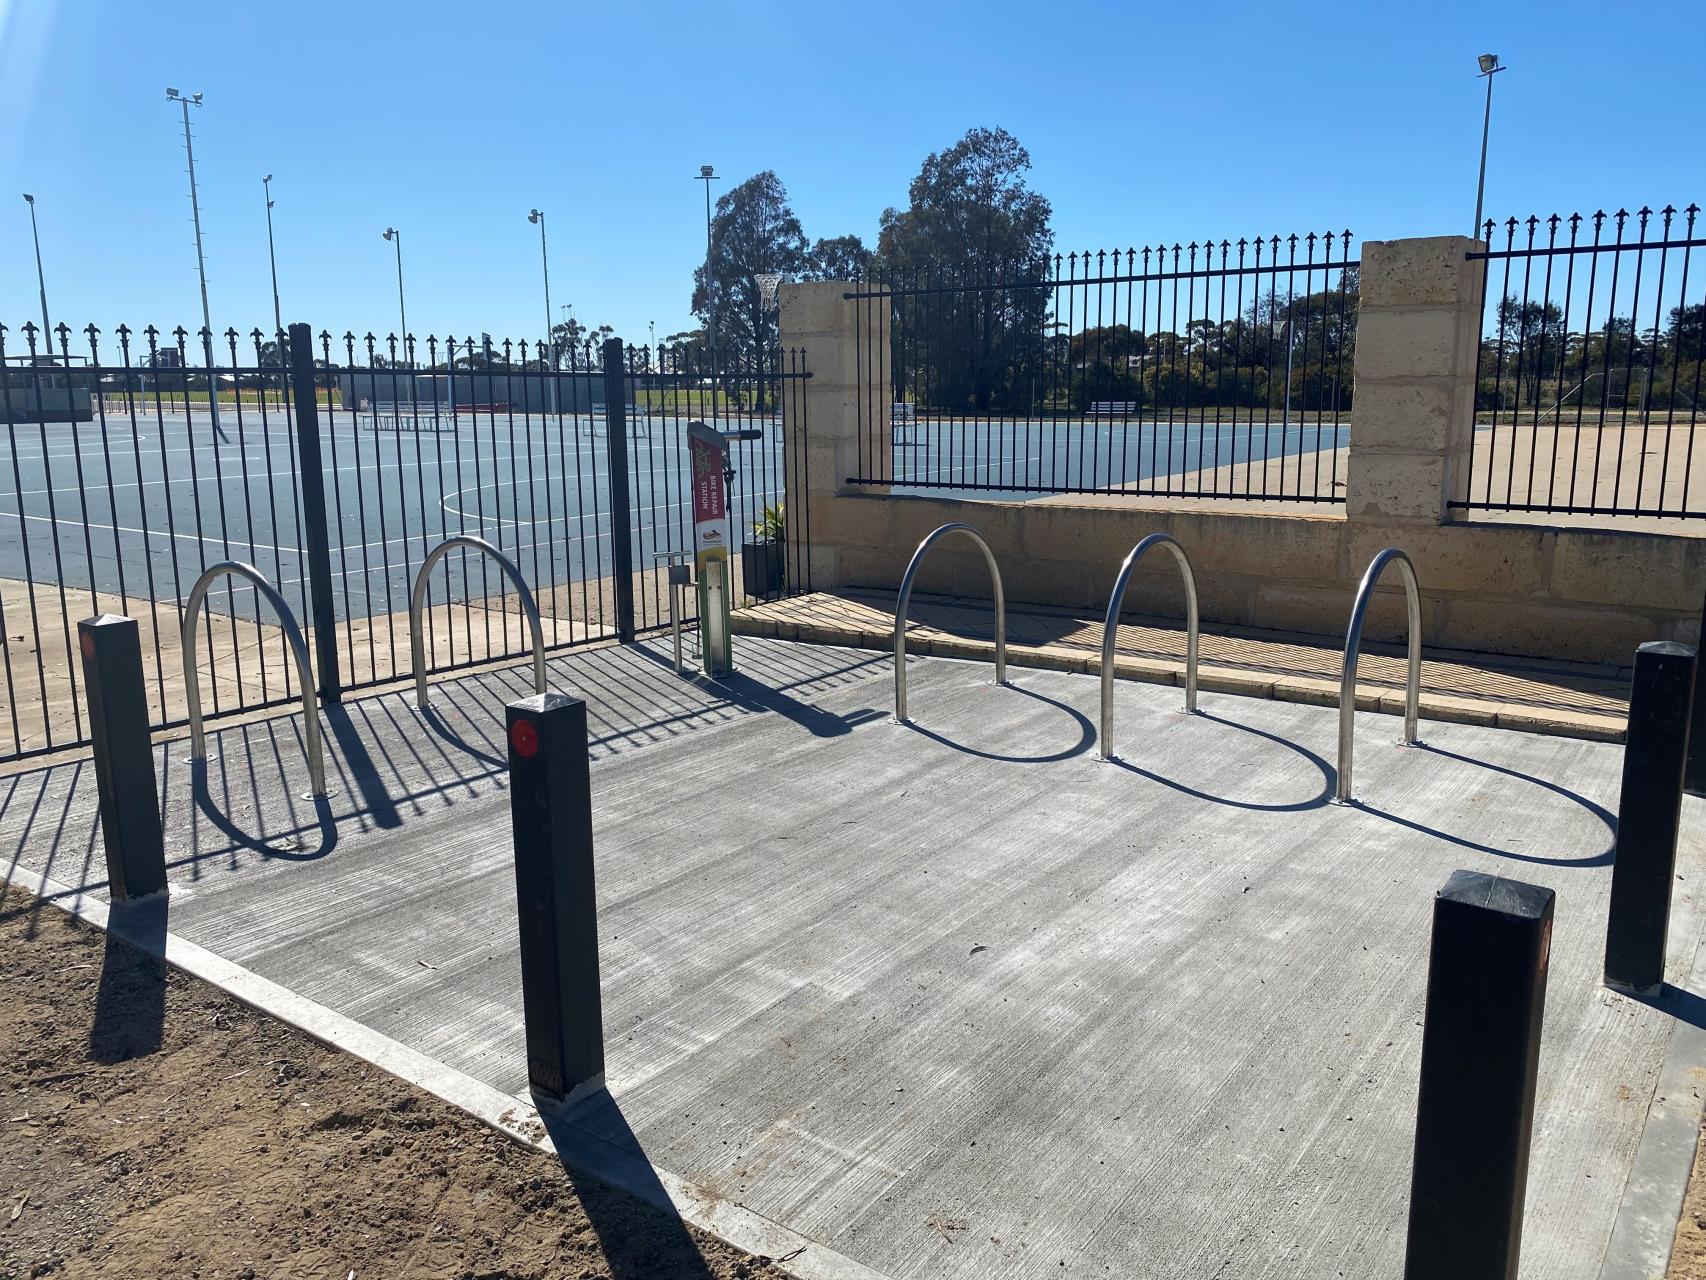 New Bike Repair Station and Bike Racks installed in Narembeen